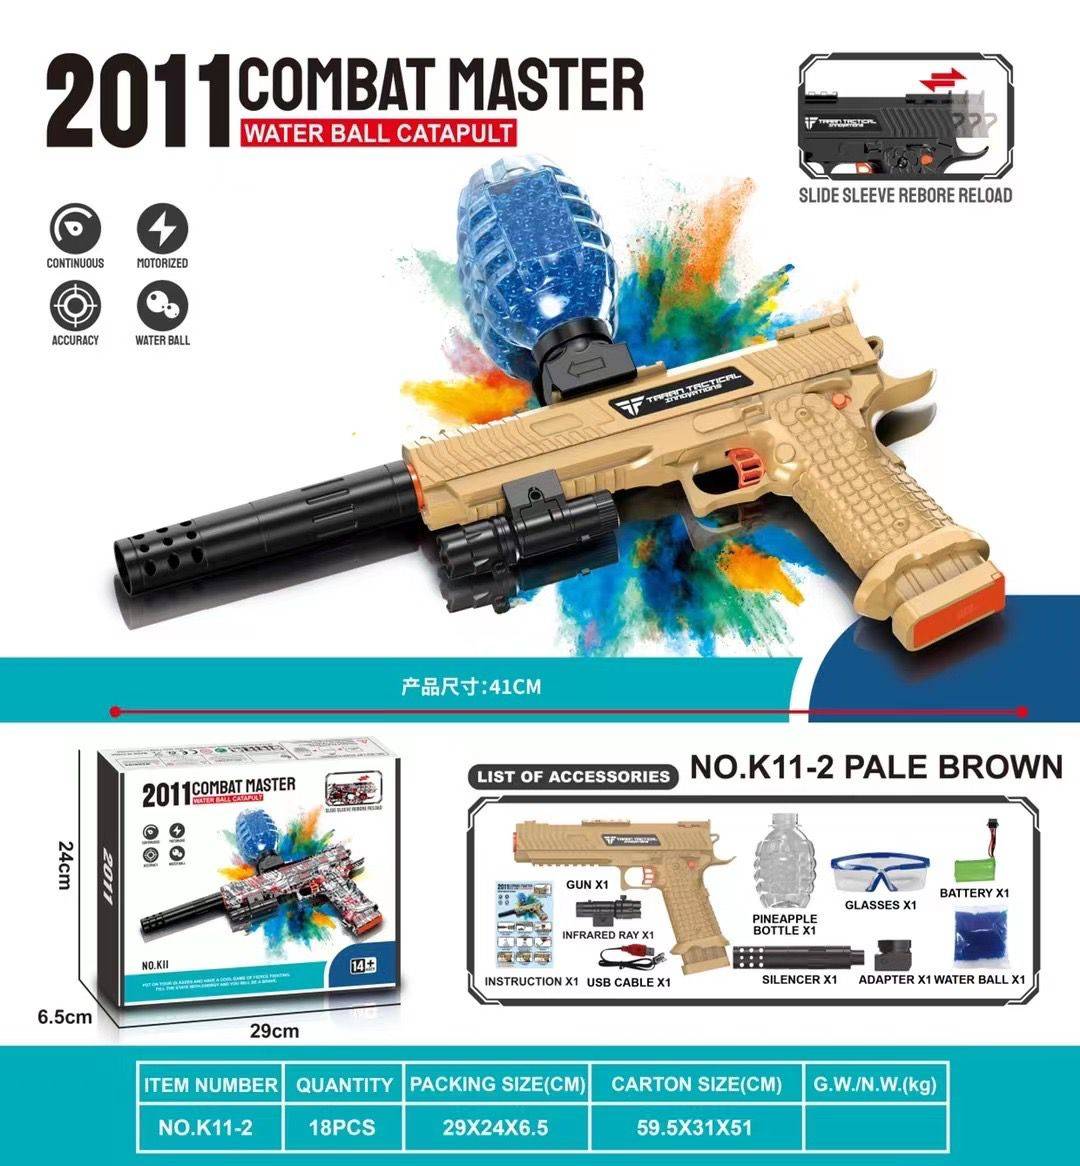 New 2011 Combat Master Gel blaster - TOP BOOST TOYS